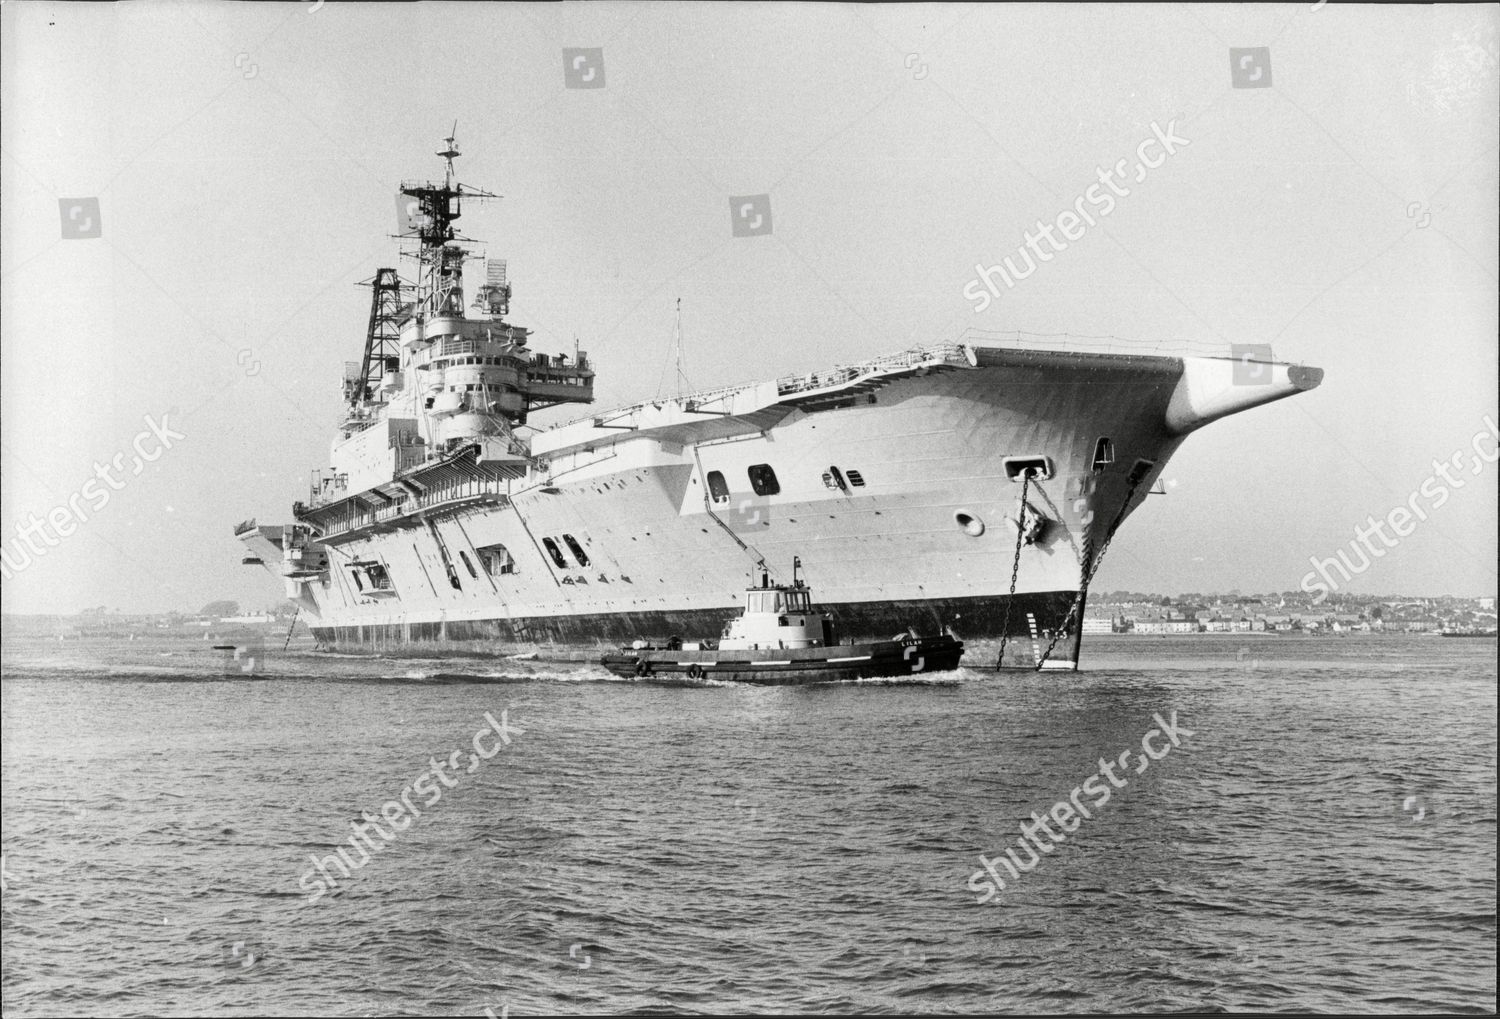 British Royal Navy Ship Hms Ark Royal 報導類庫存照片 庫存圖片 Shutterstock